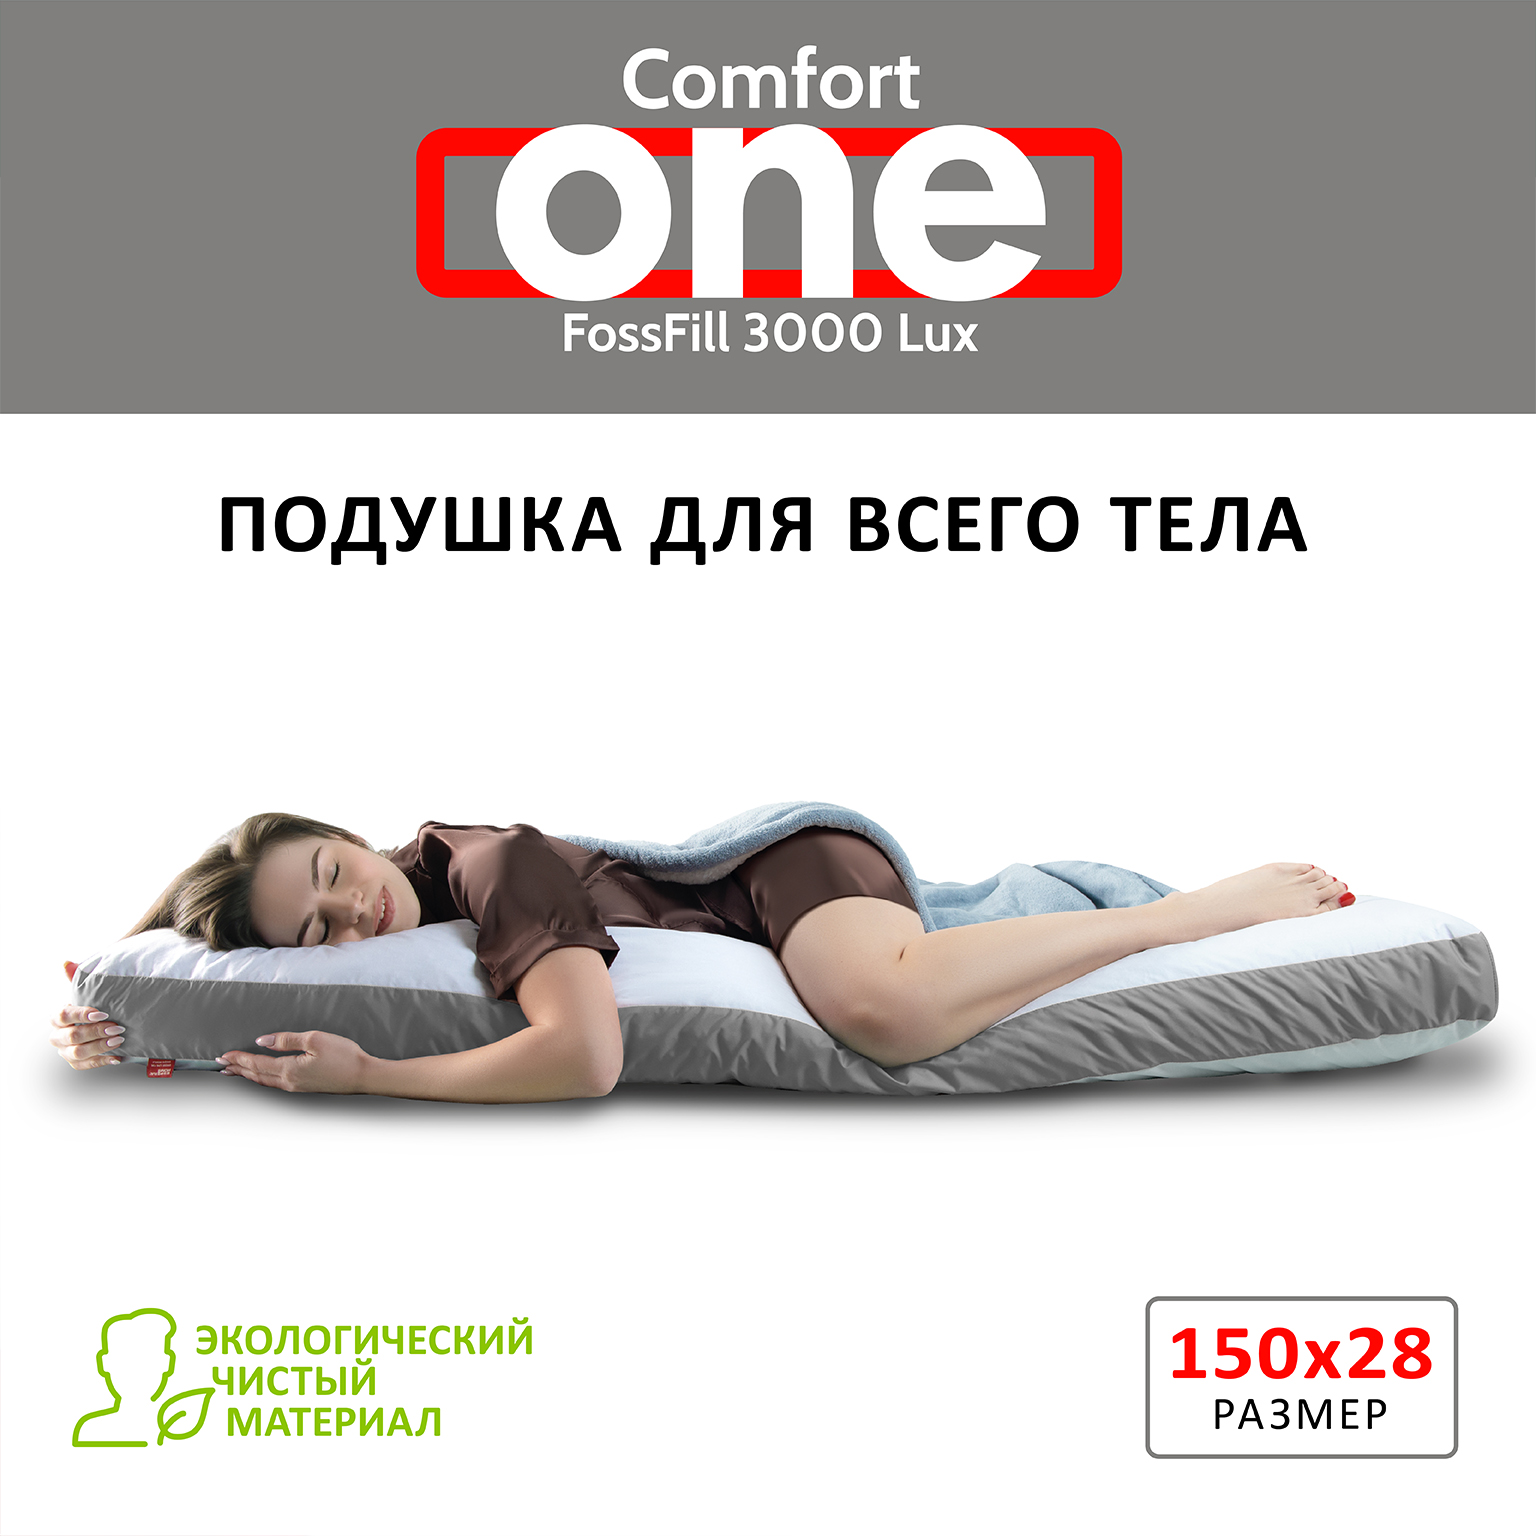       Comfort One /        150x29